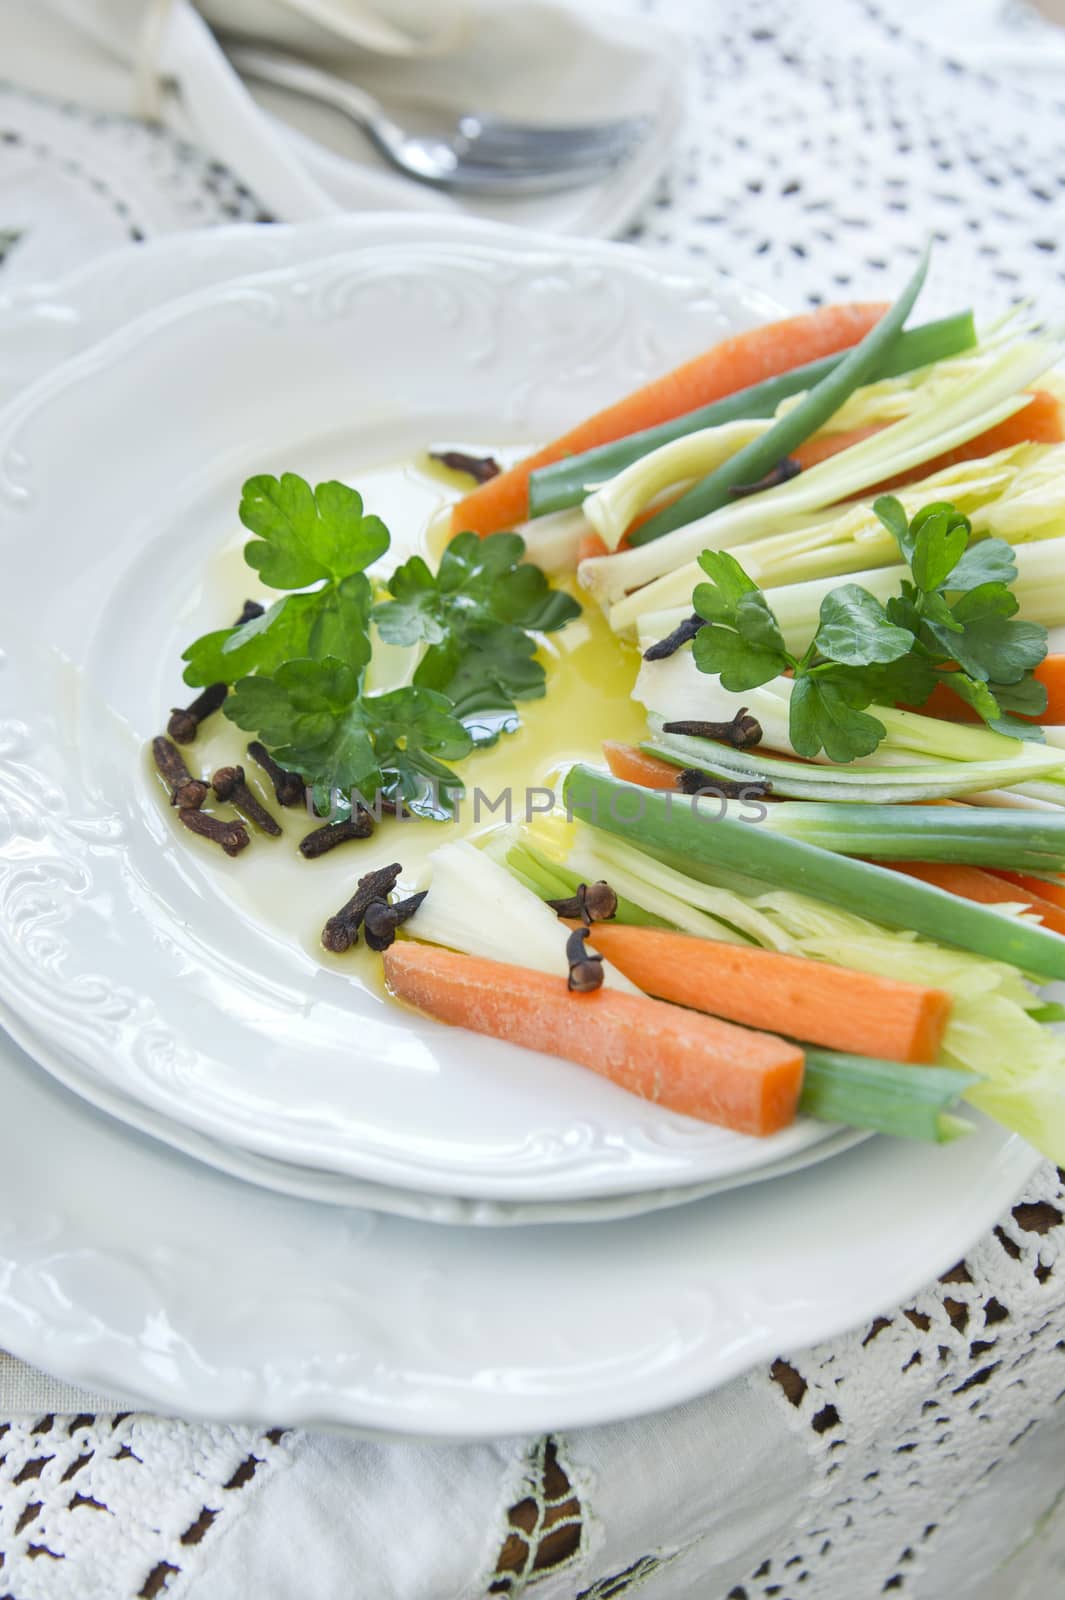 Presentation of mixed vegetables  by fotografiche.eu